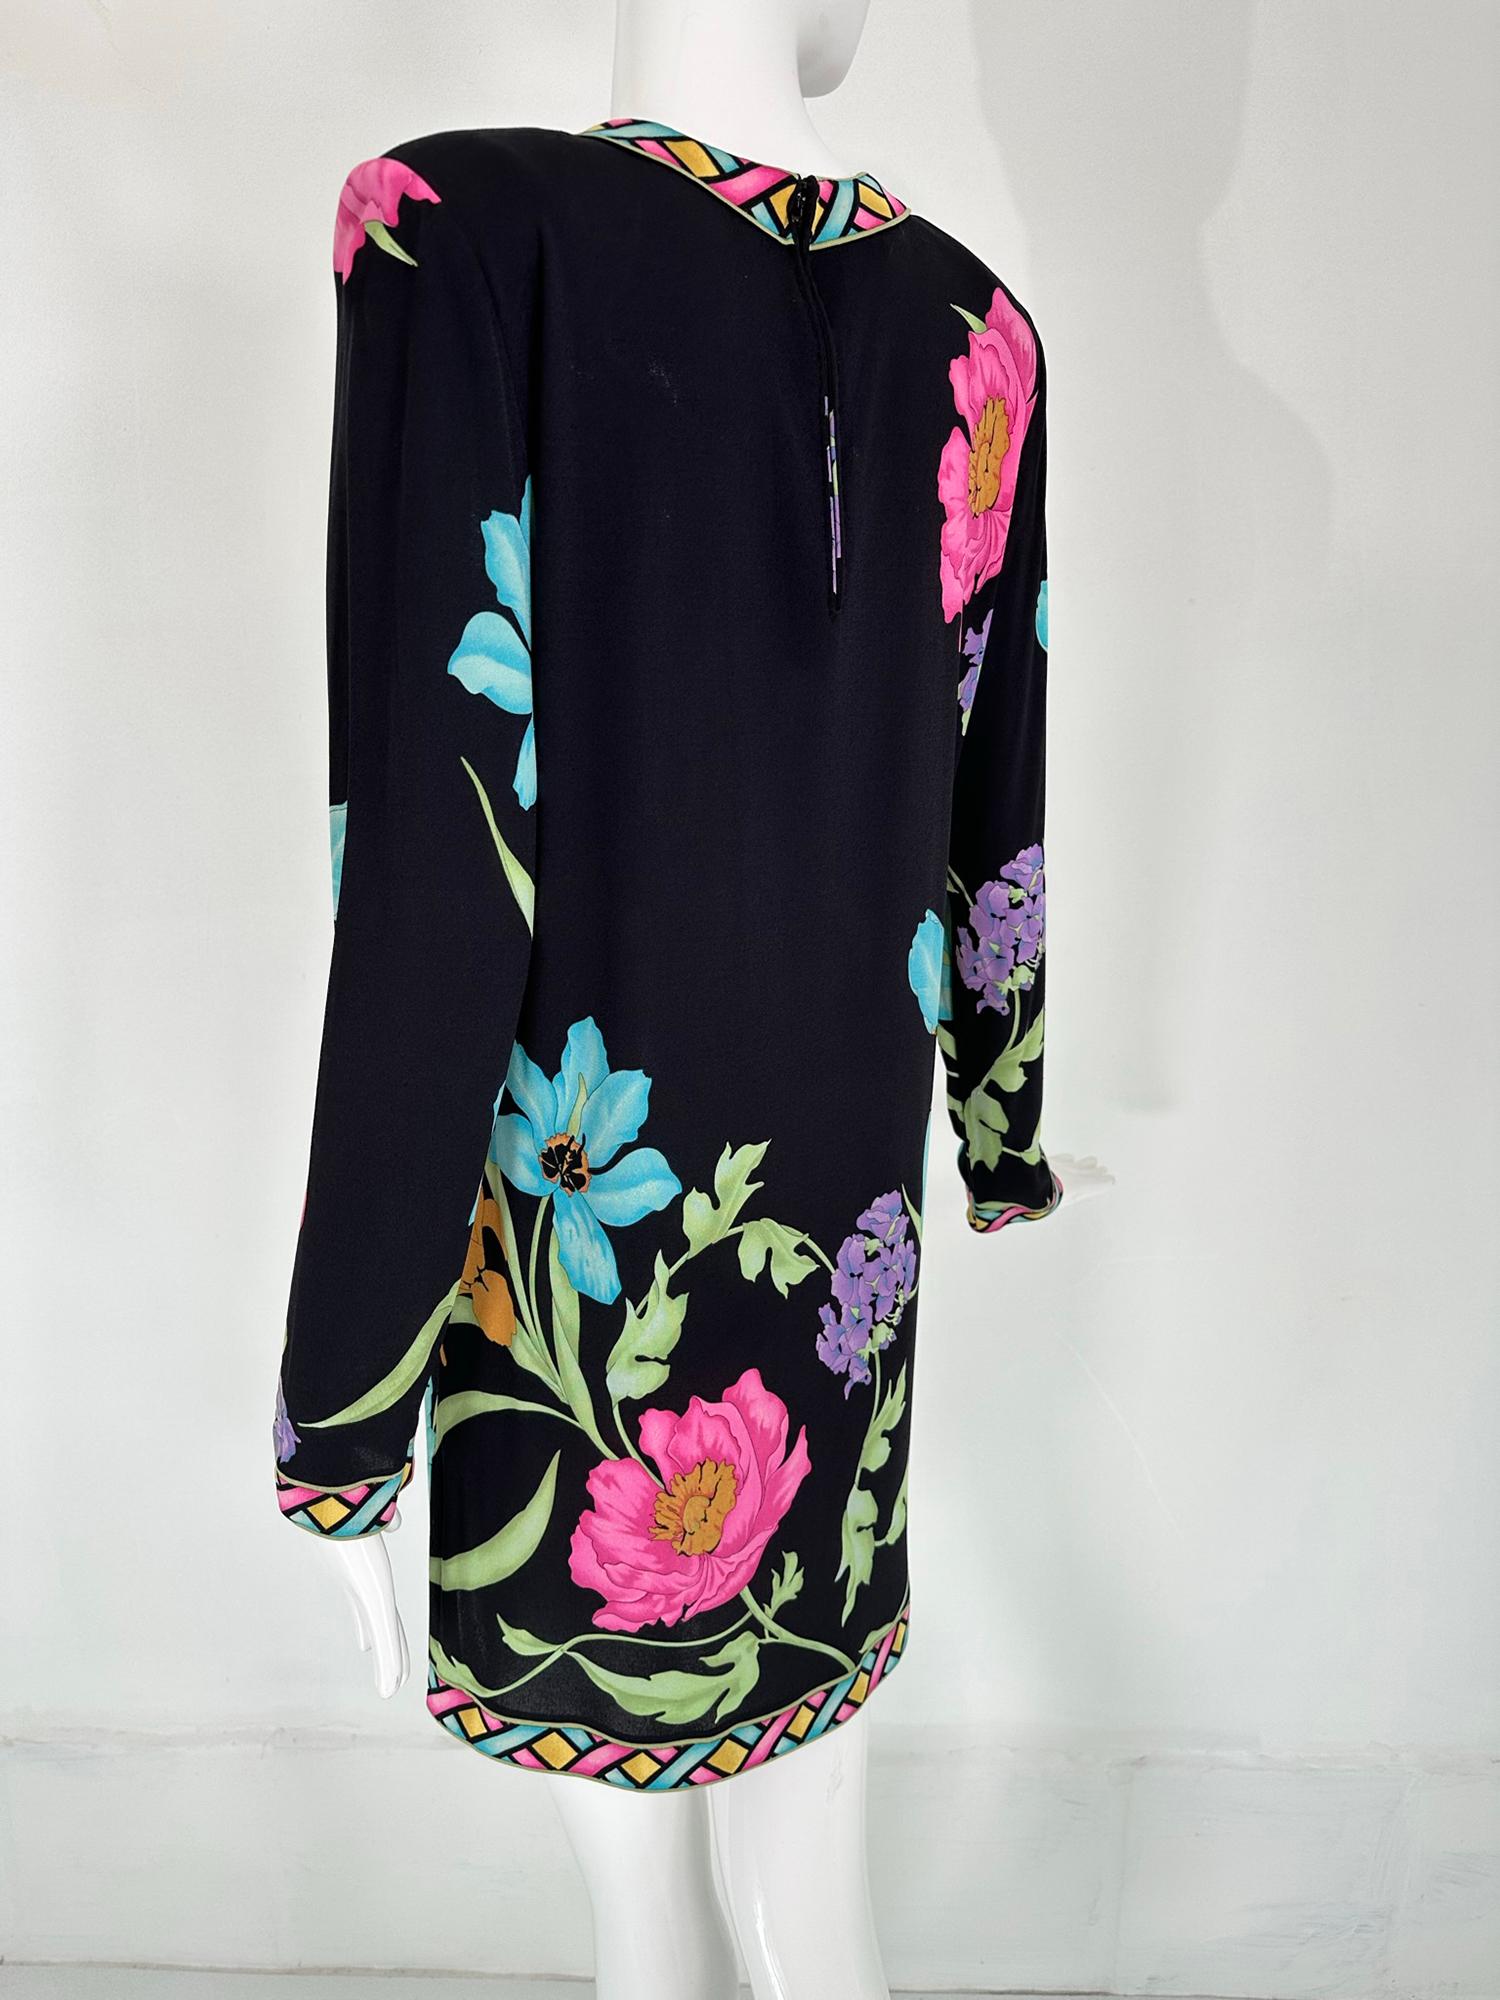 Averaro Bessi Spectacular Silk Vibrant Floral Tunic Dress 12  For Sale 5